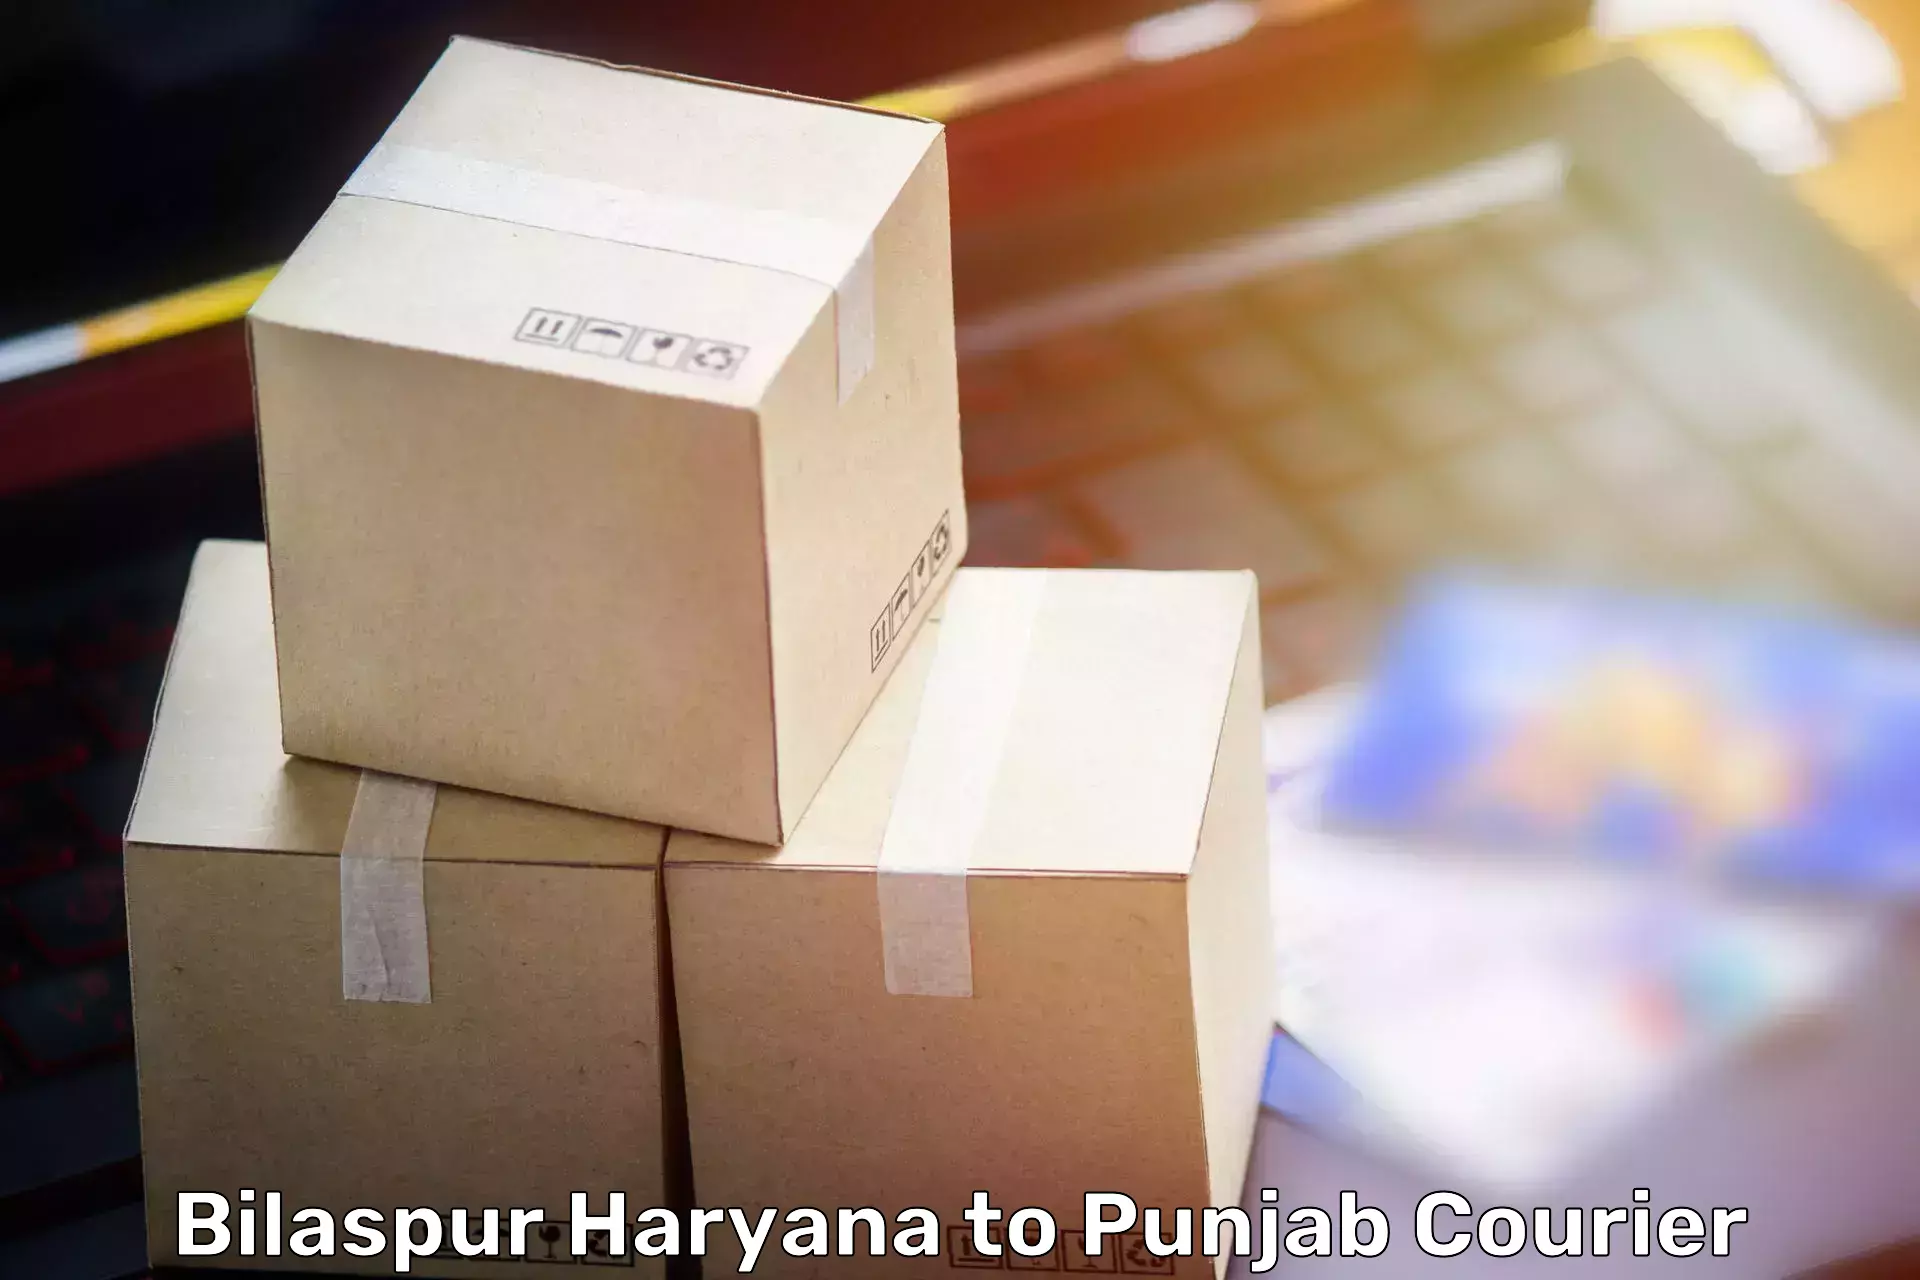 Home shifting experts Bilaspur Haryana to Firozpur